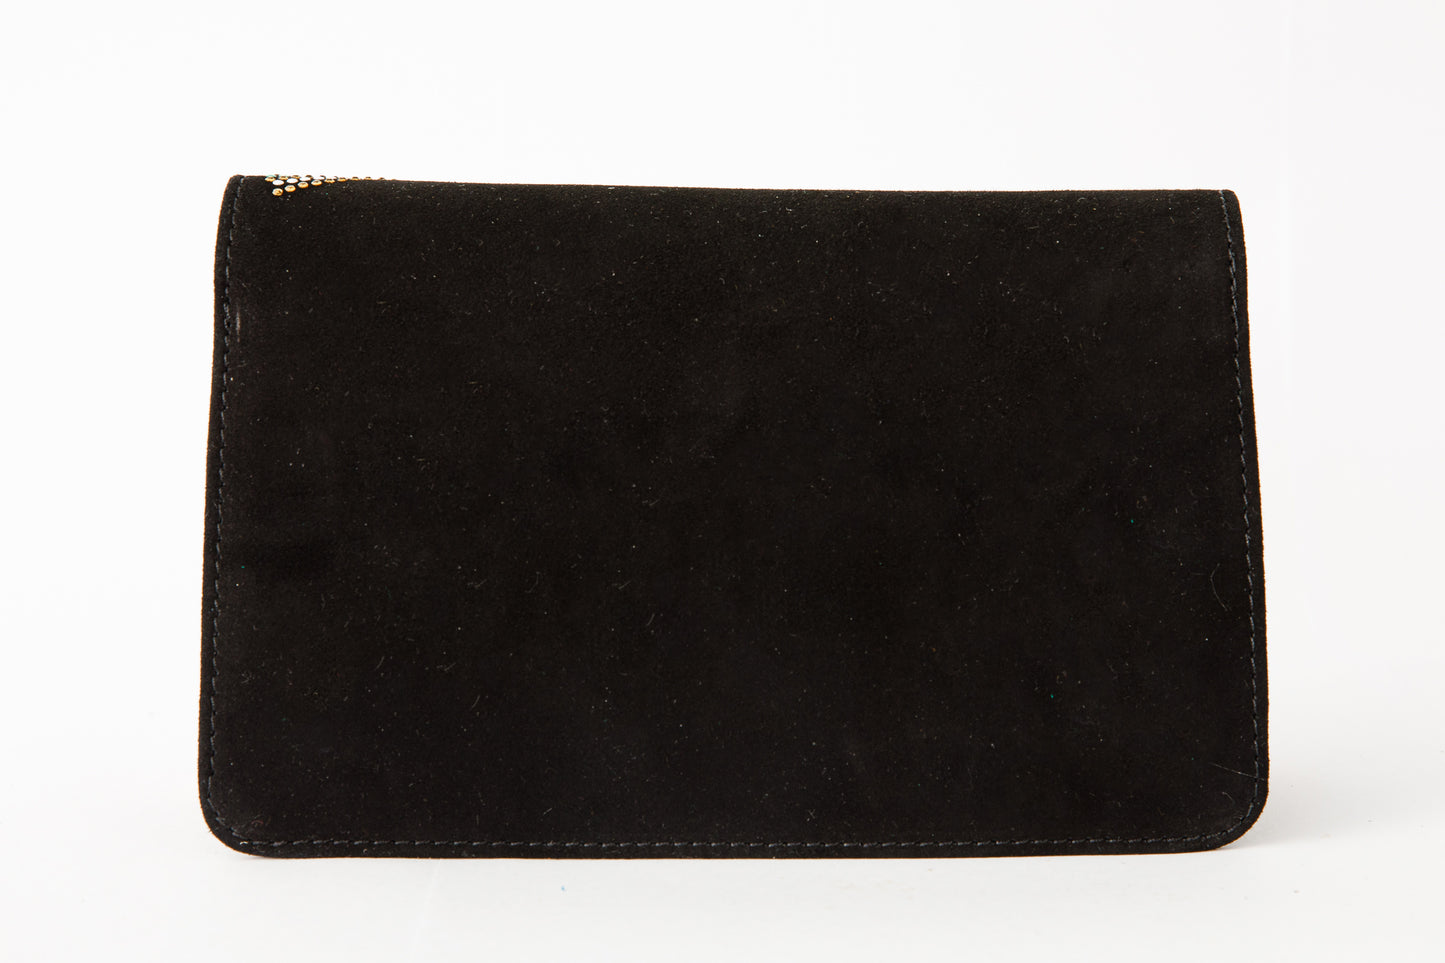 The Palma Black Glitter Leather Handbag